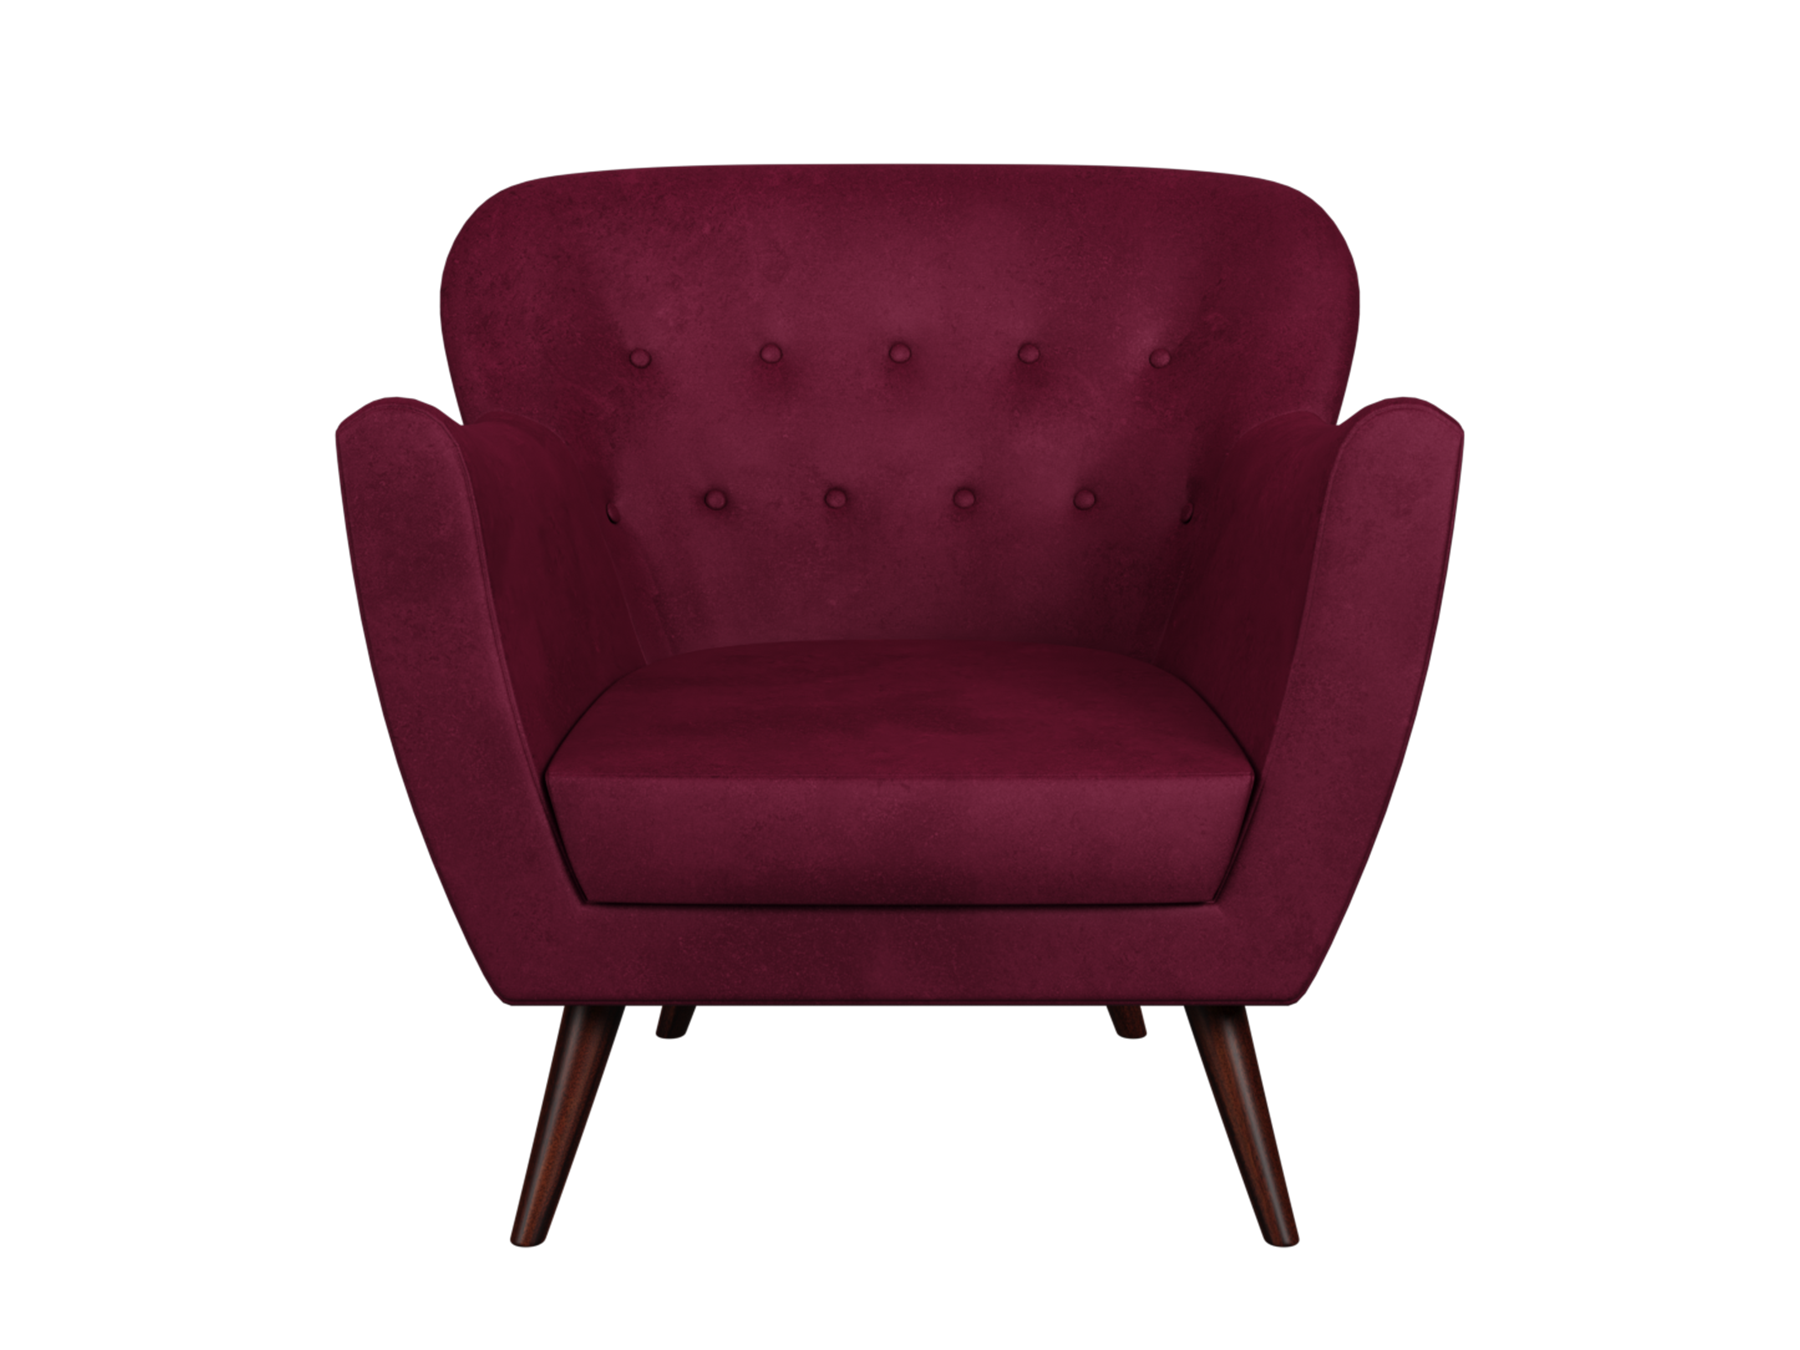 Bedroom Sofa Chair Alexa In Maroon Colour